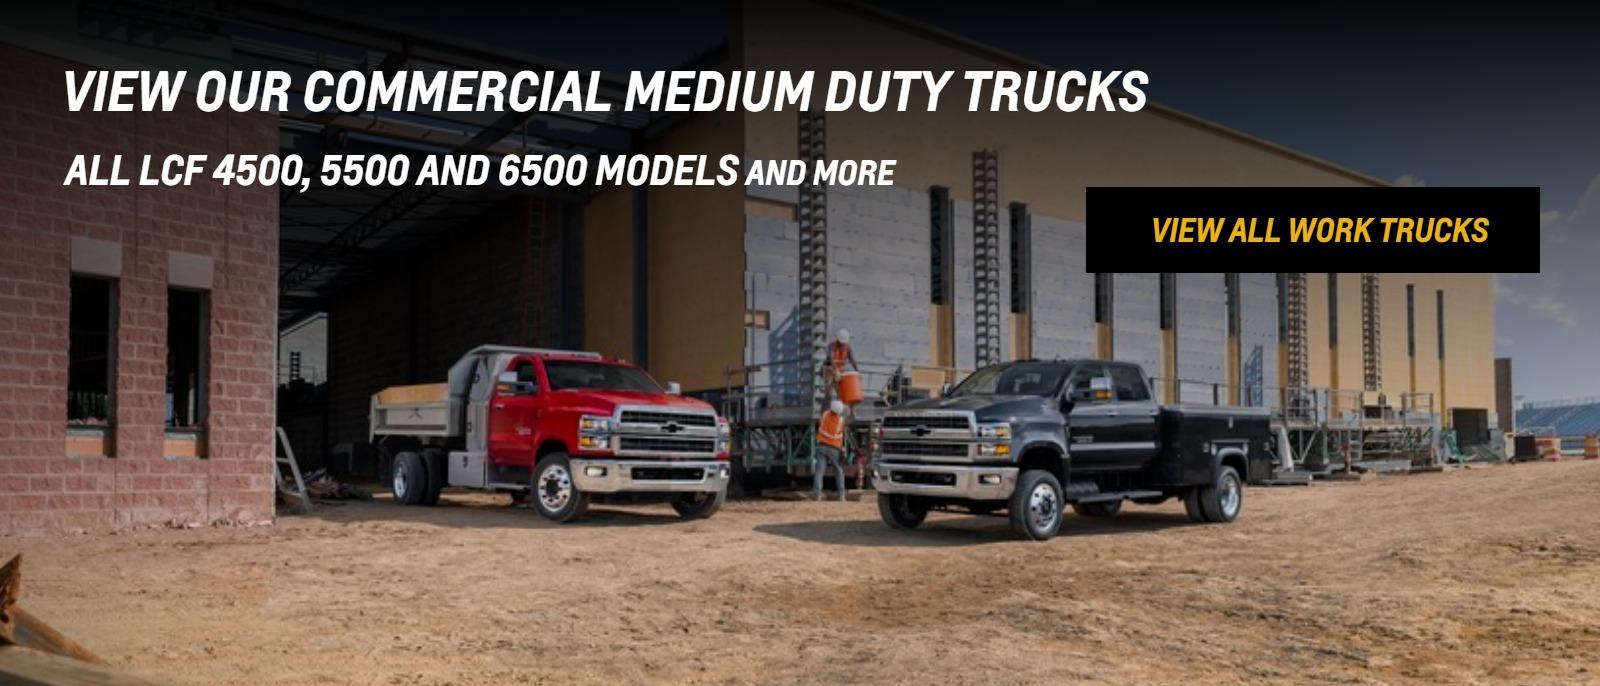 Commerical Medium Duty trucks